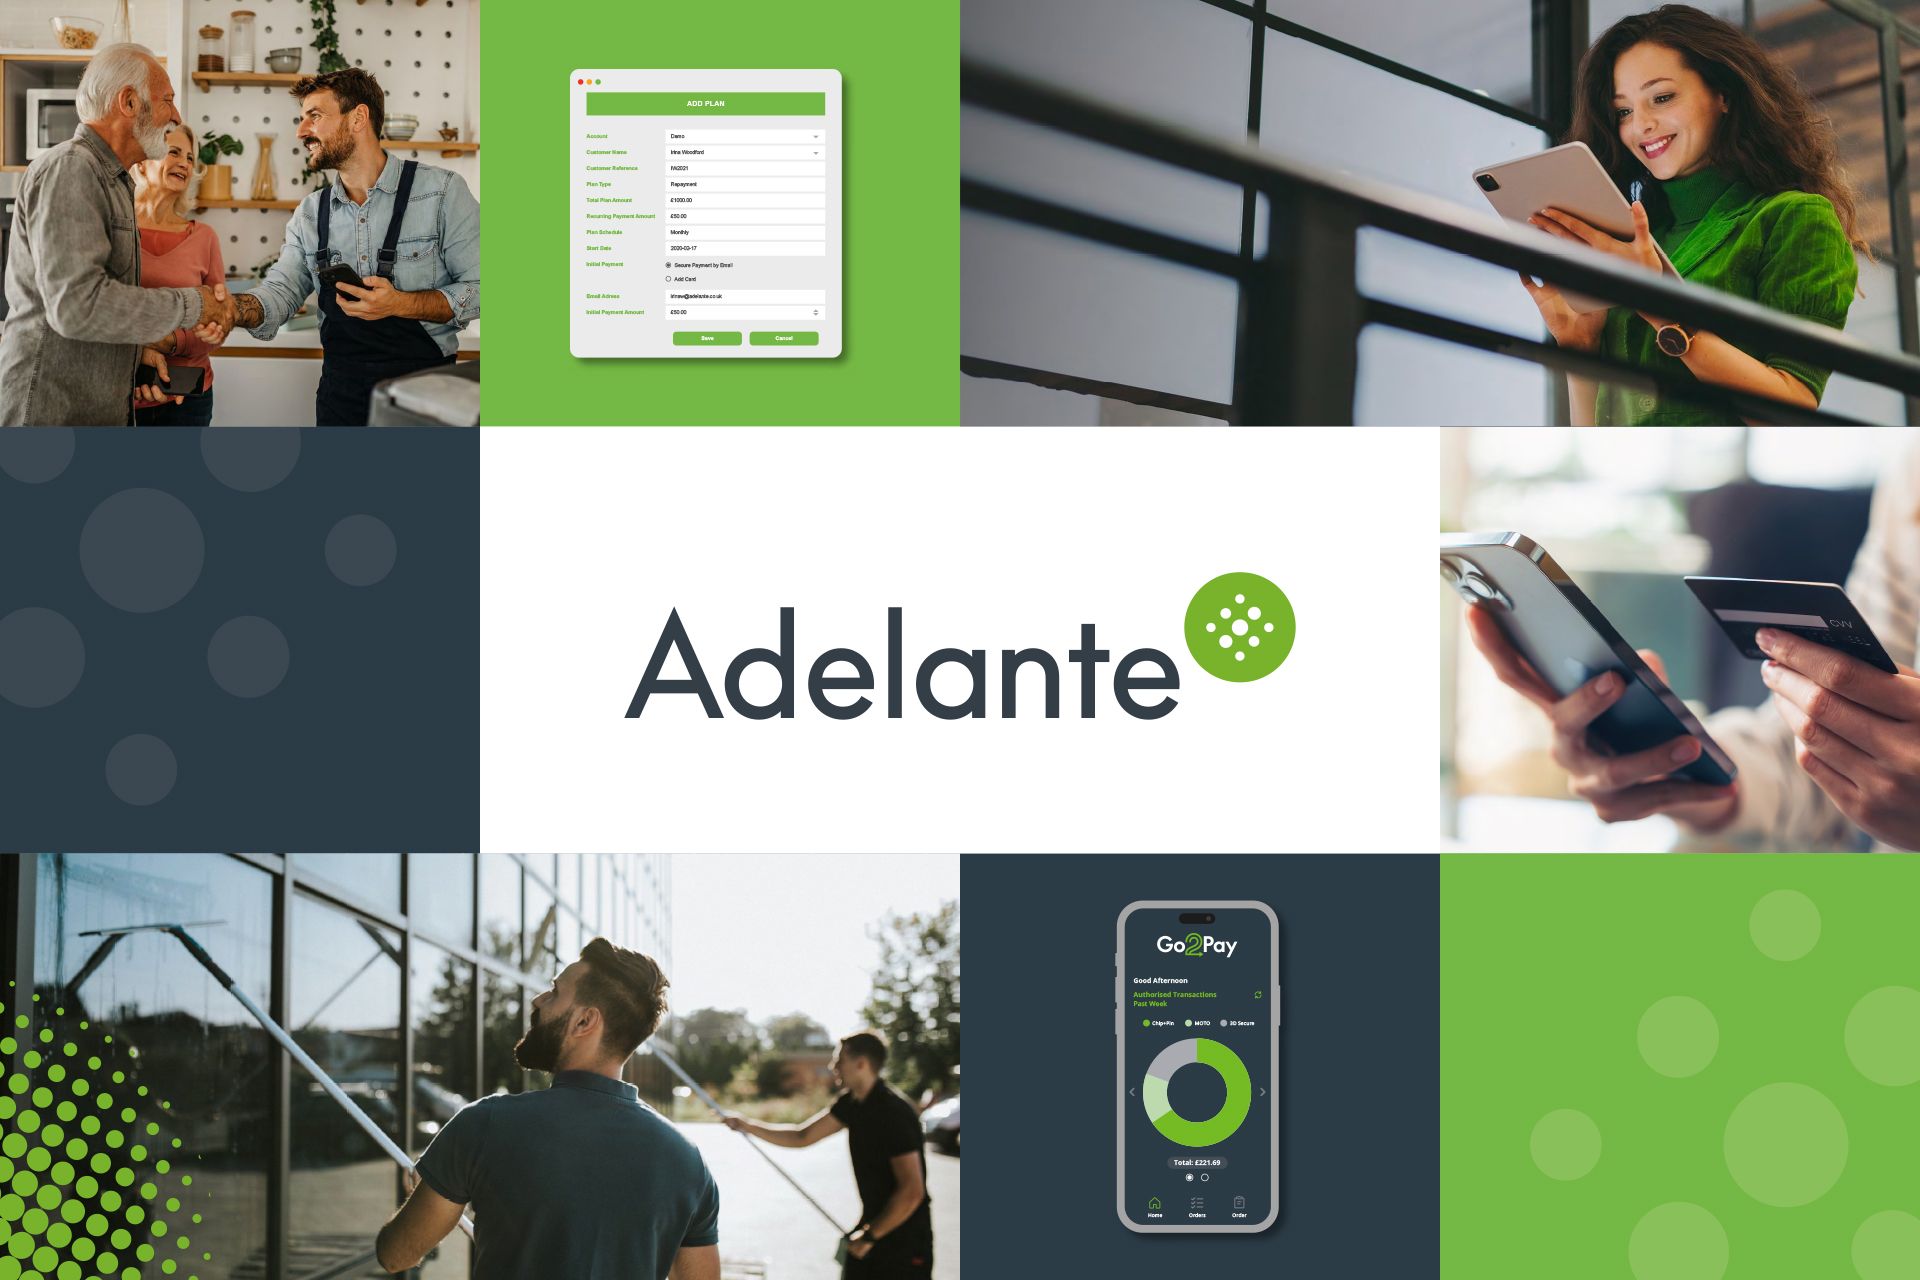 Adelante logo and identity